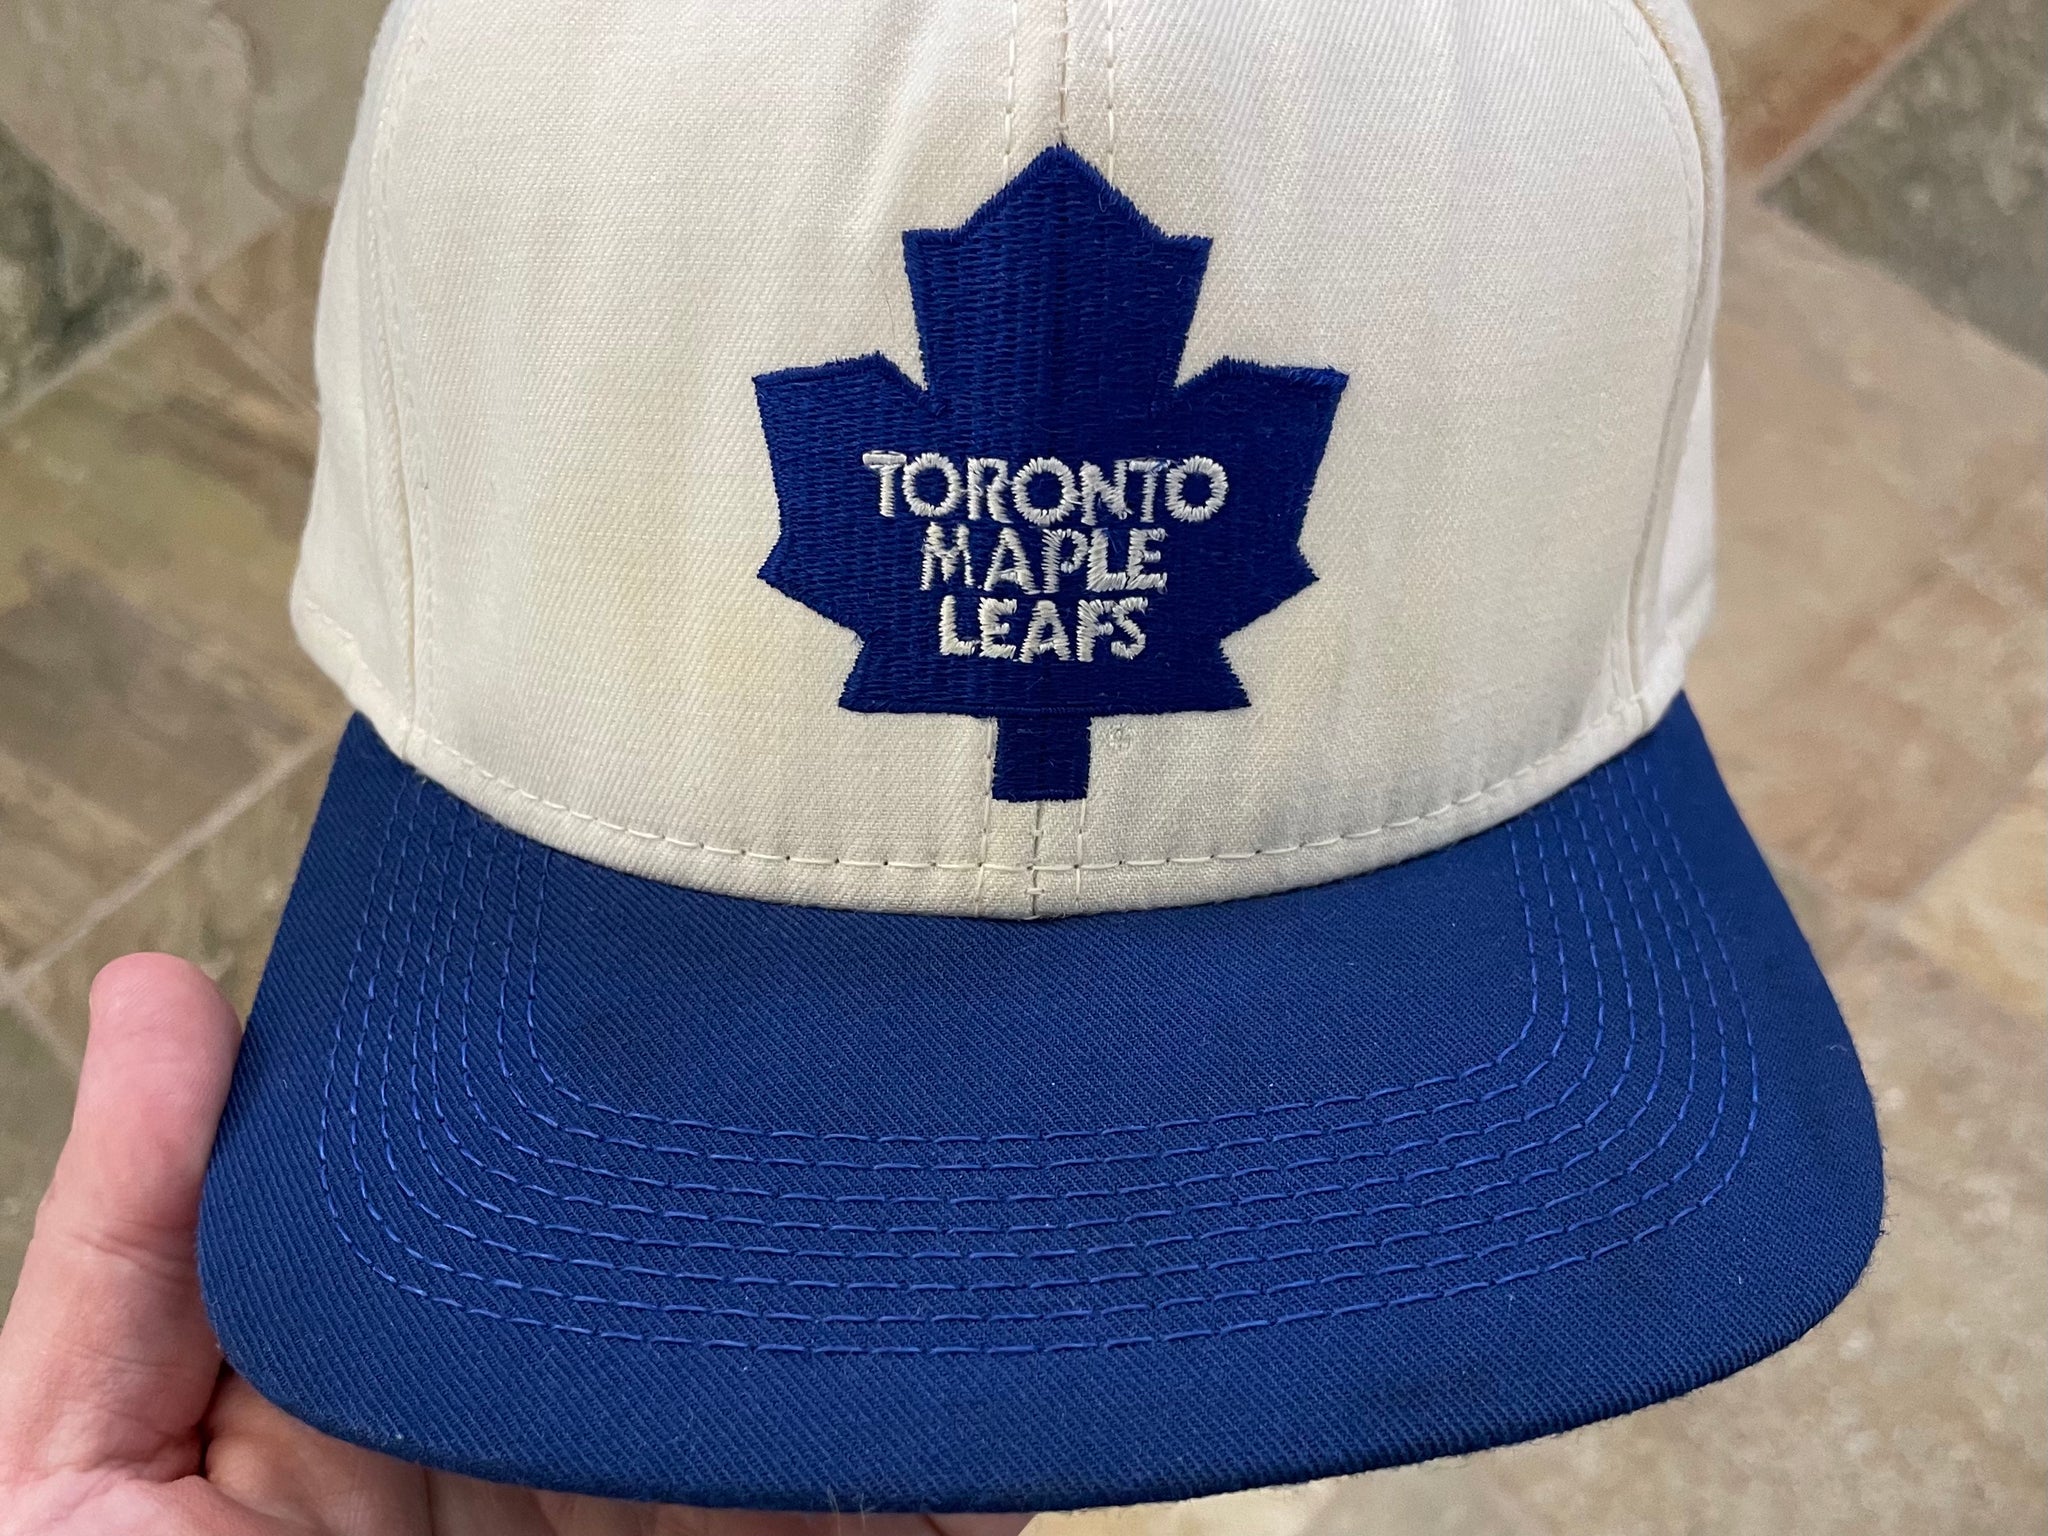 Vintage 90s Starter NHL Toronto Maple Leafs White Hockey Jersey